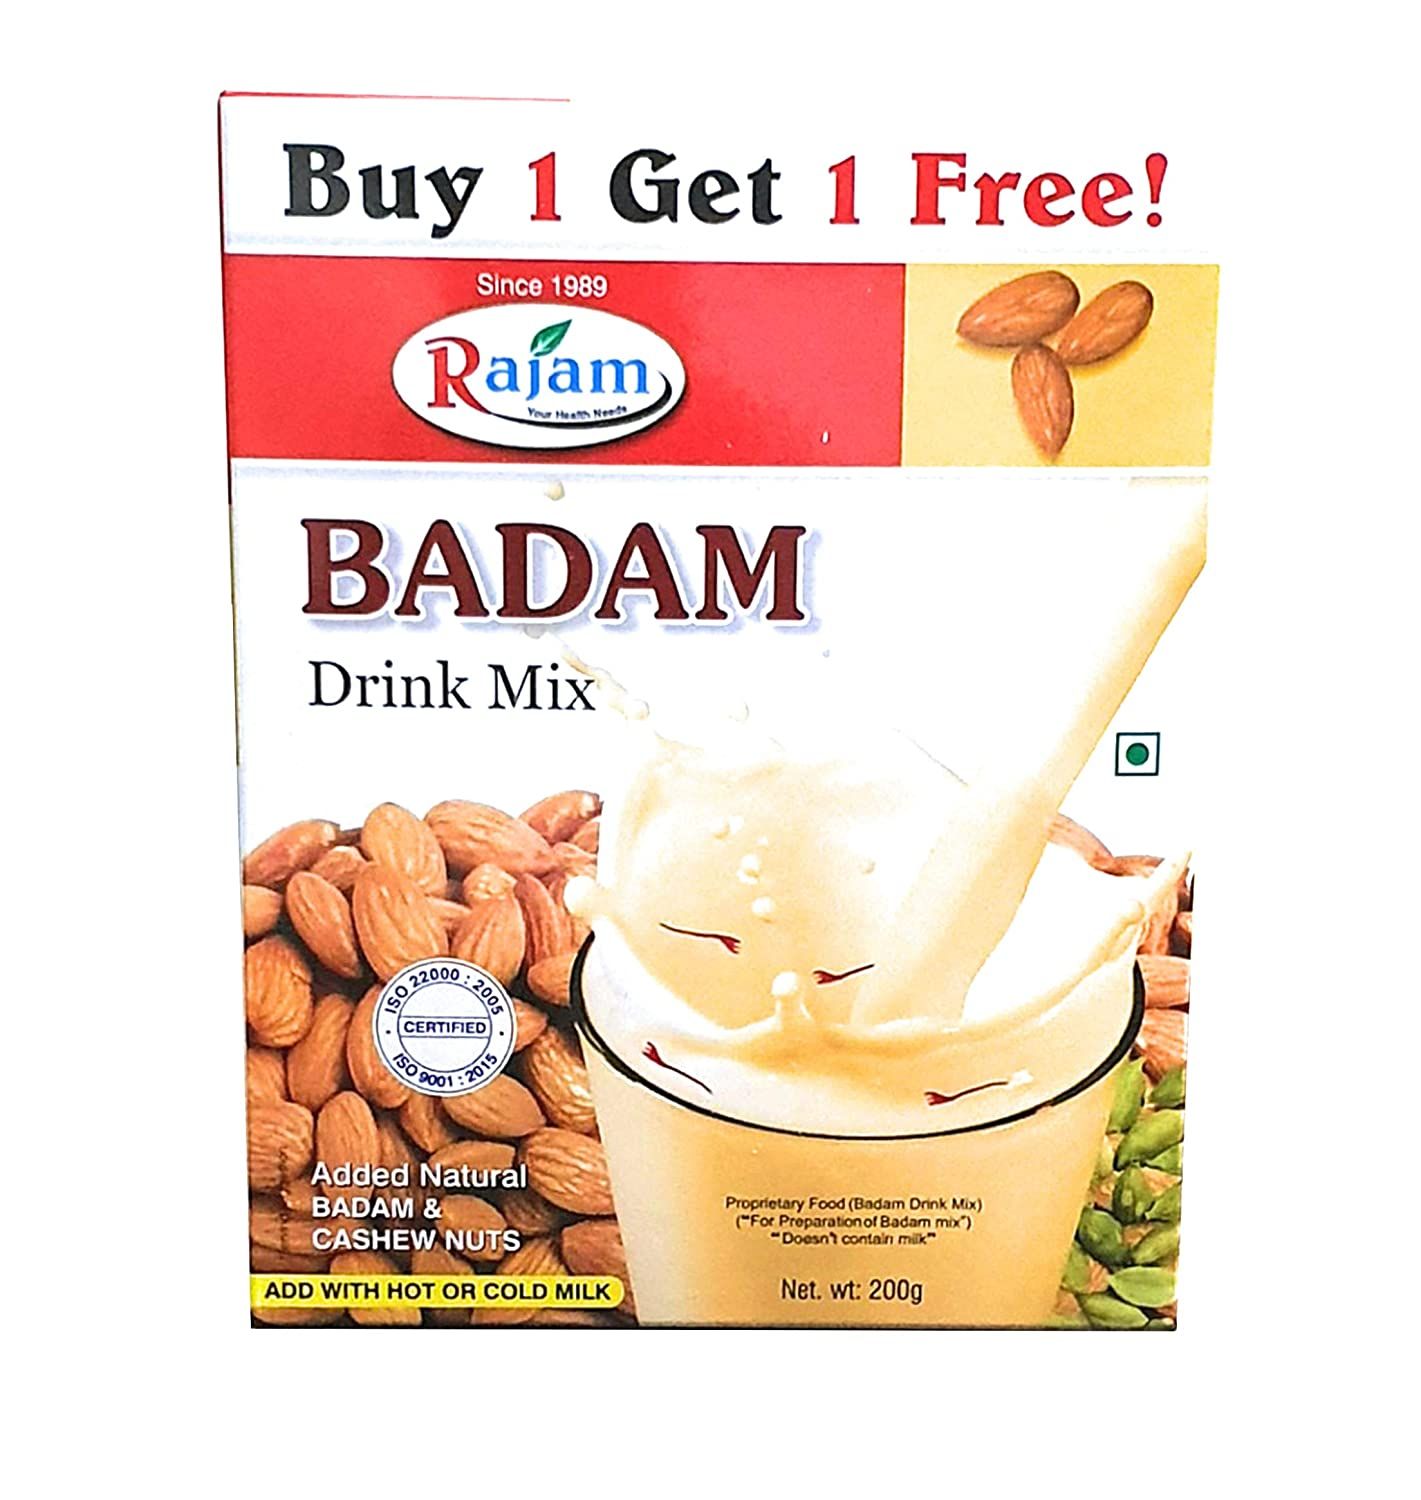 Rajam Badam Drink Mix Image